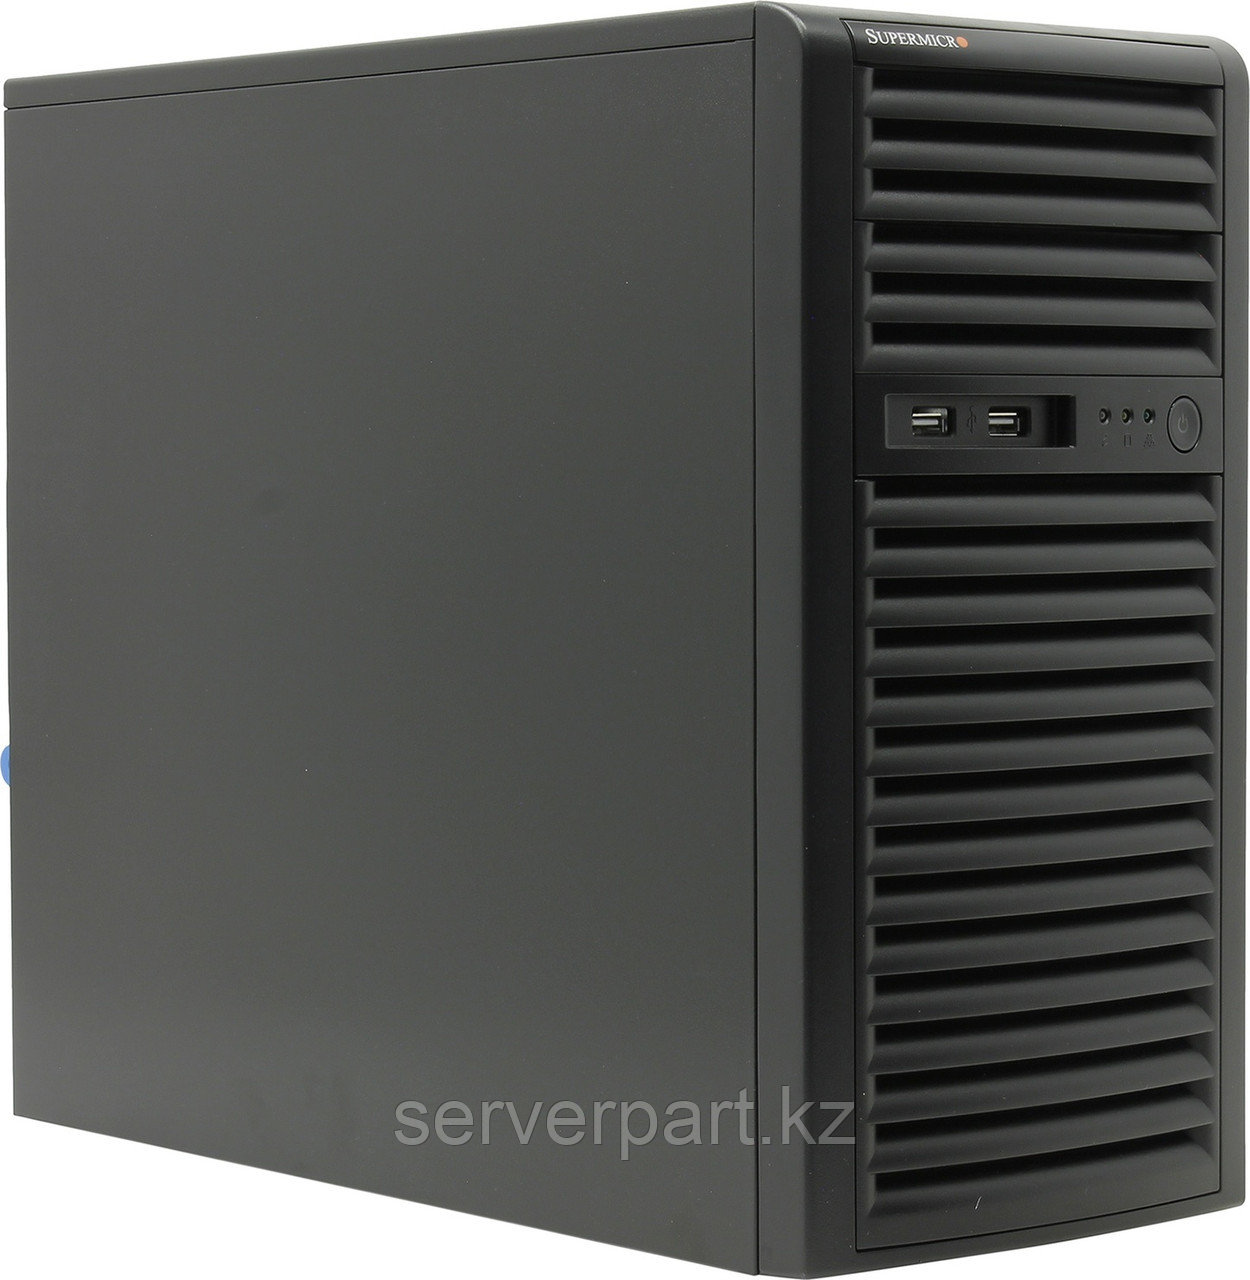 Сервер Supermicro SYS-5039D Tower/4-core intel xeon E3-1220v6 3GHz/16GB EUDIMM/1x480GB SSD RI Hyb, фото 1